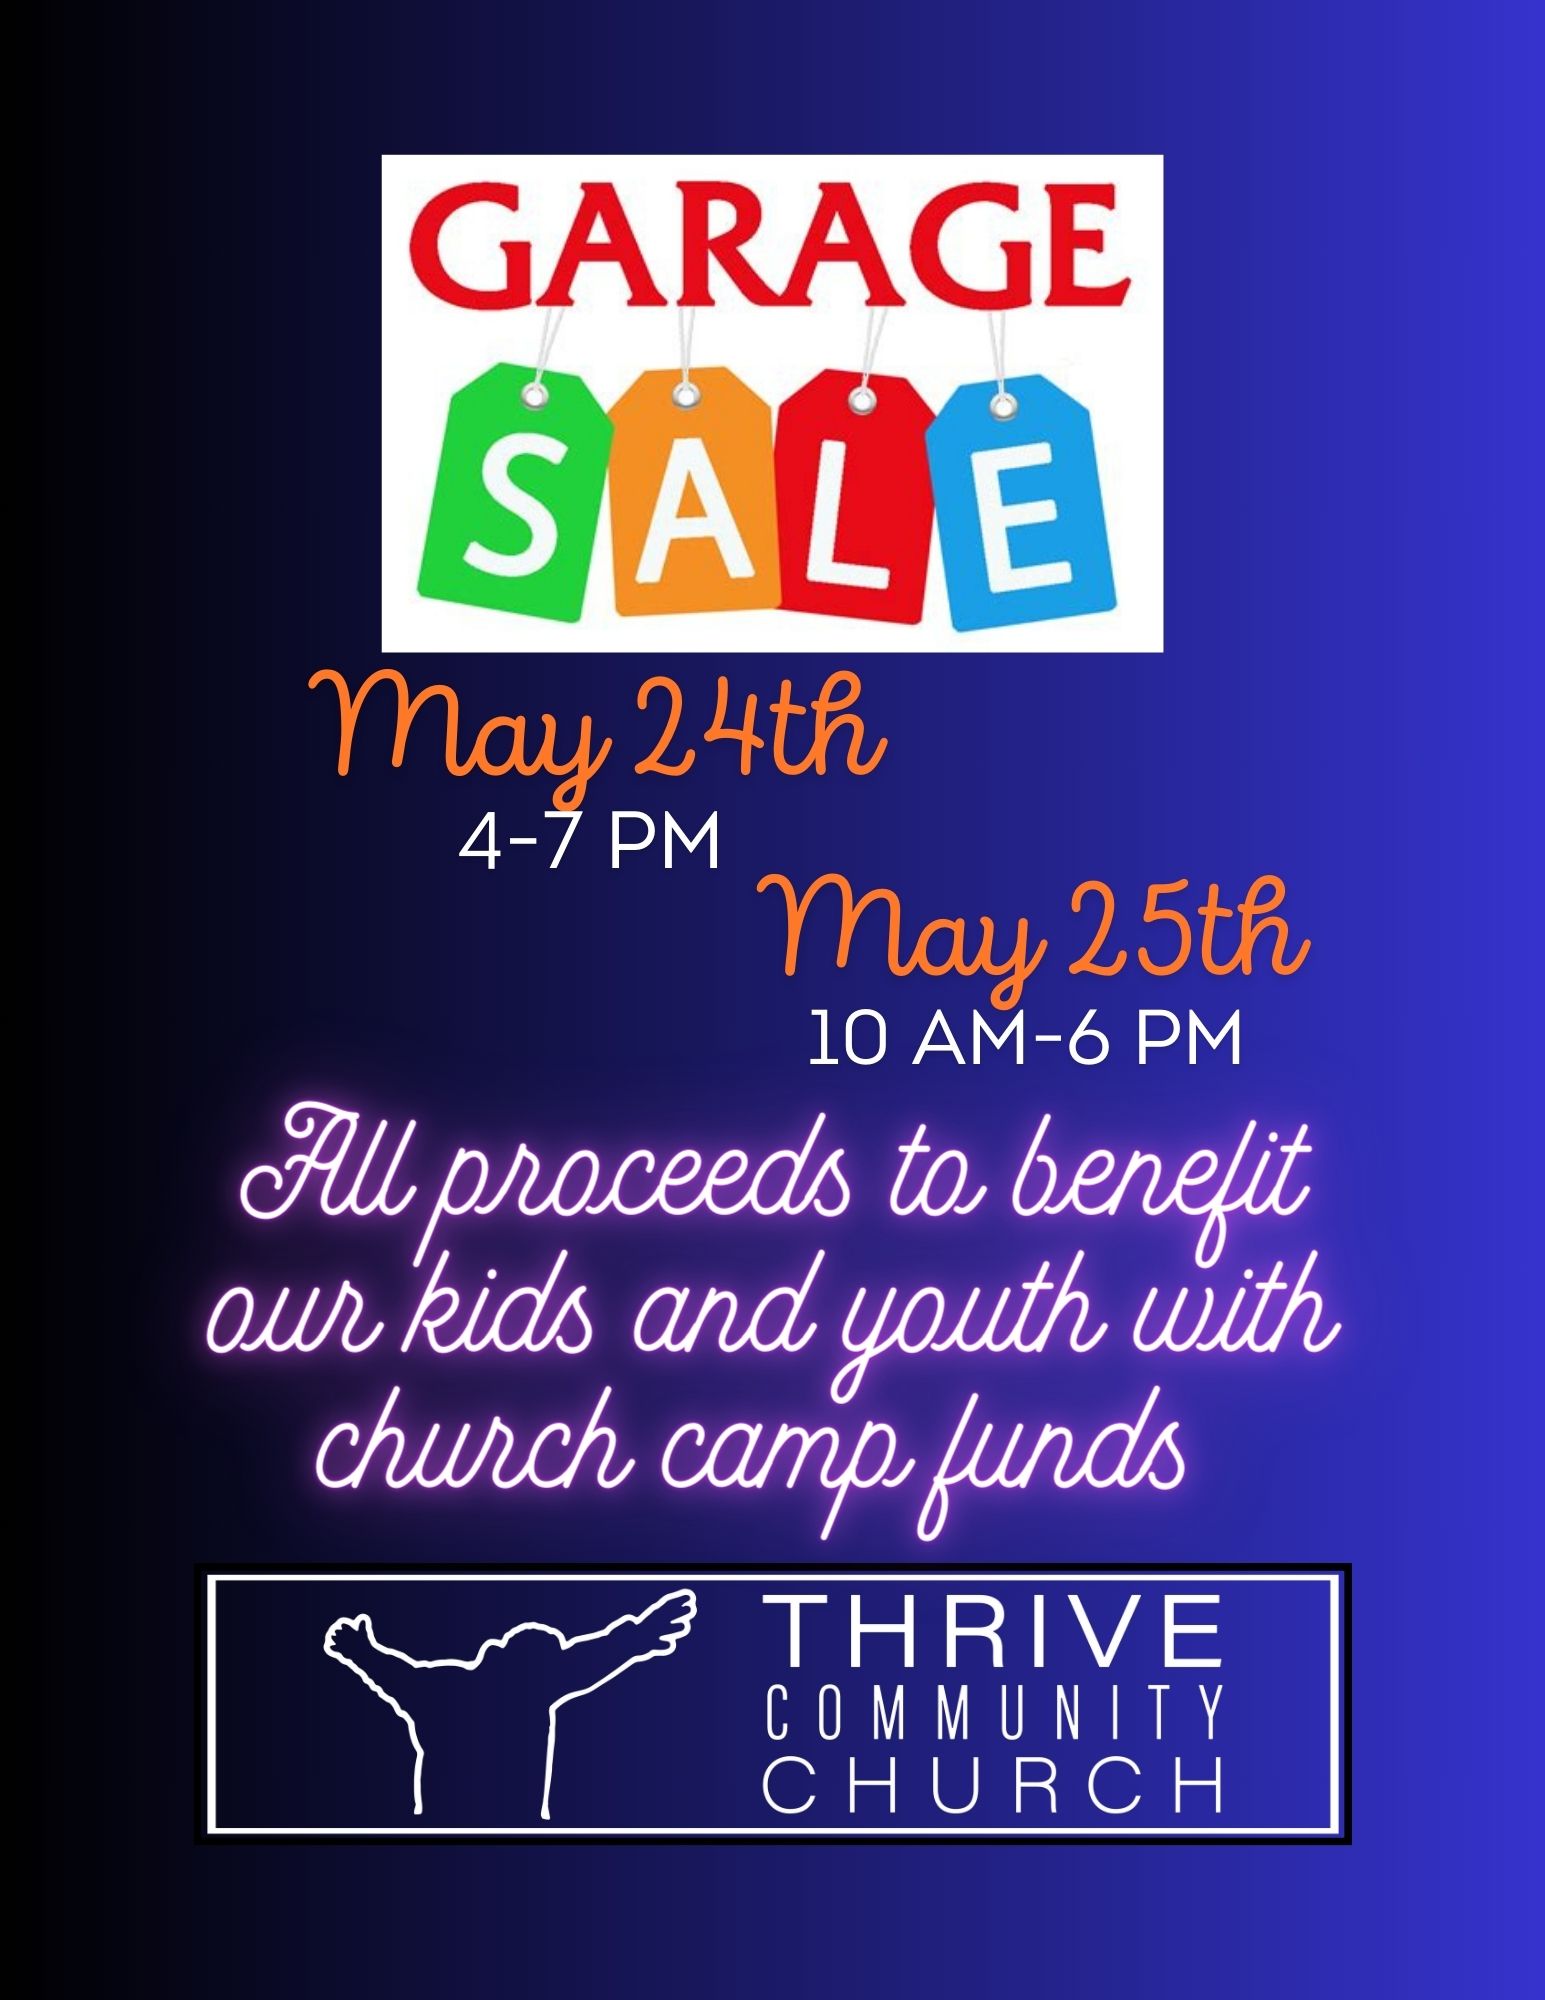 Garage Sale: Thrive Community Church @ Thrive Community Church